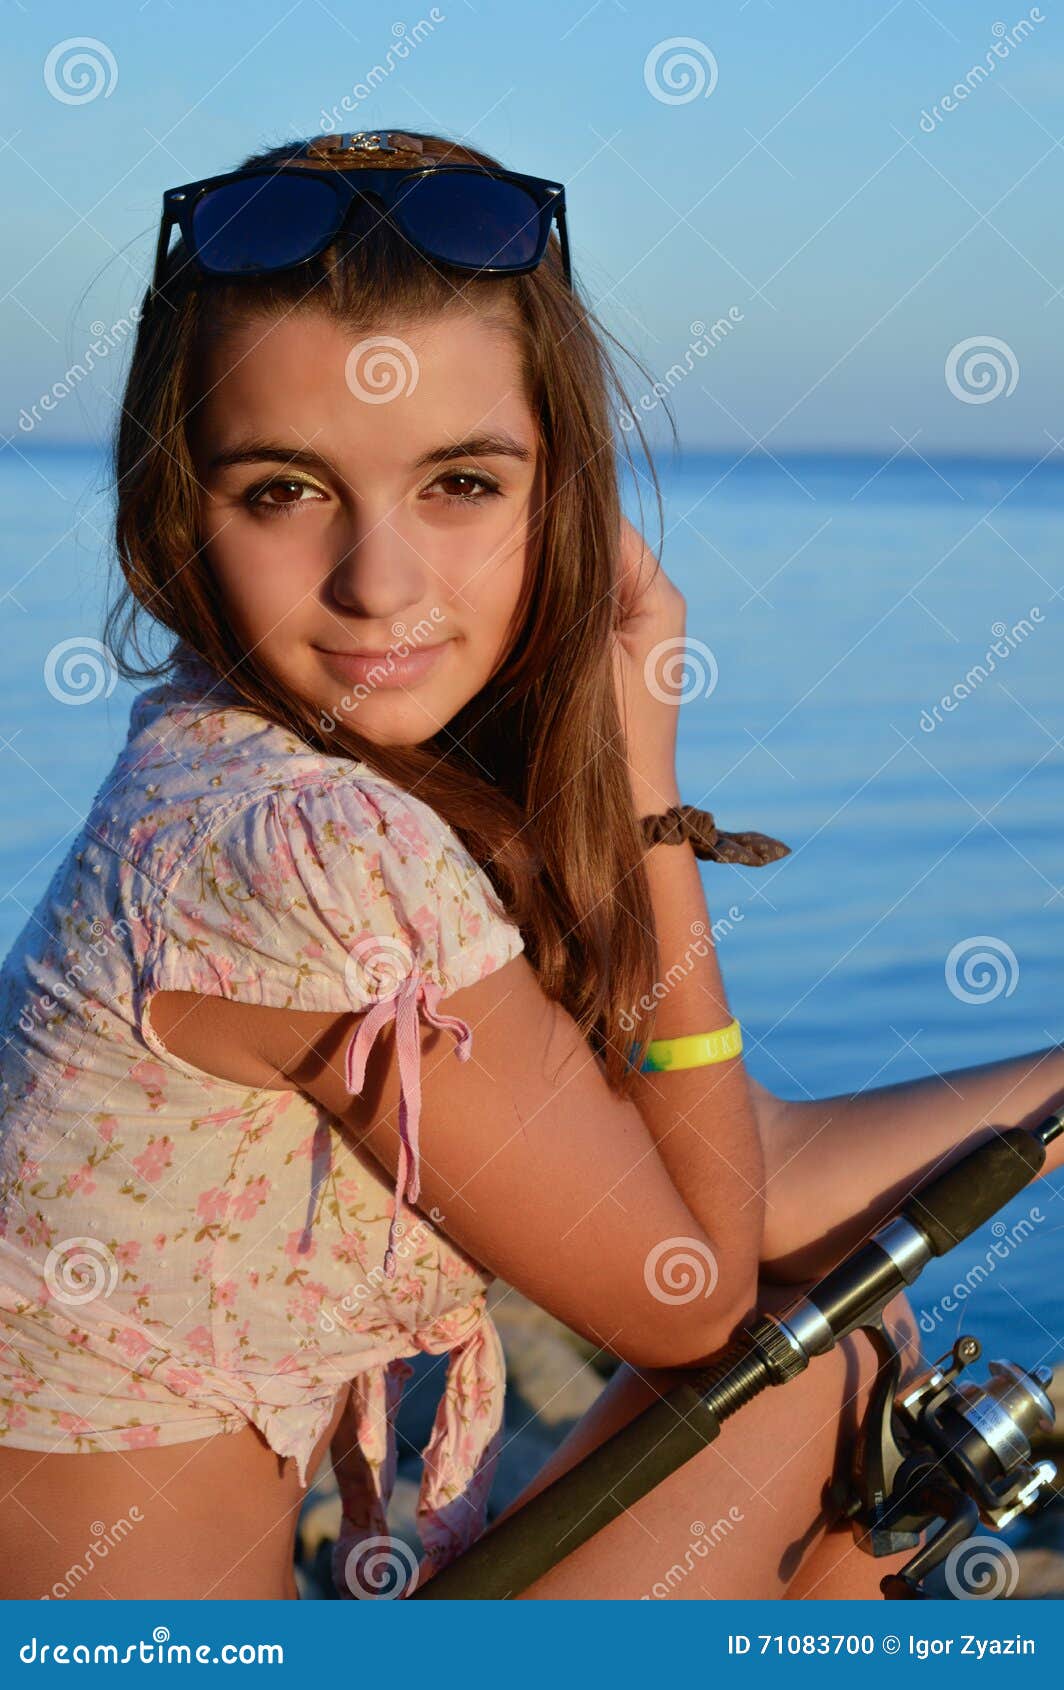 https://thumbs.dreamstime.com/z/woman-fishing-sea-girl-rod-hand-71083700.jpg